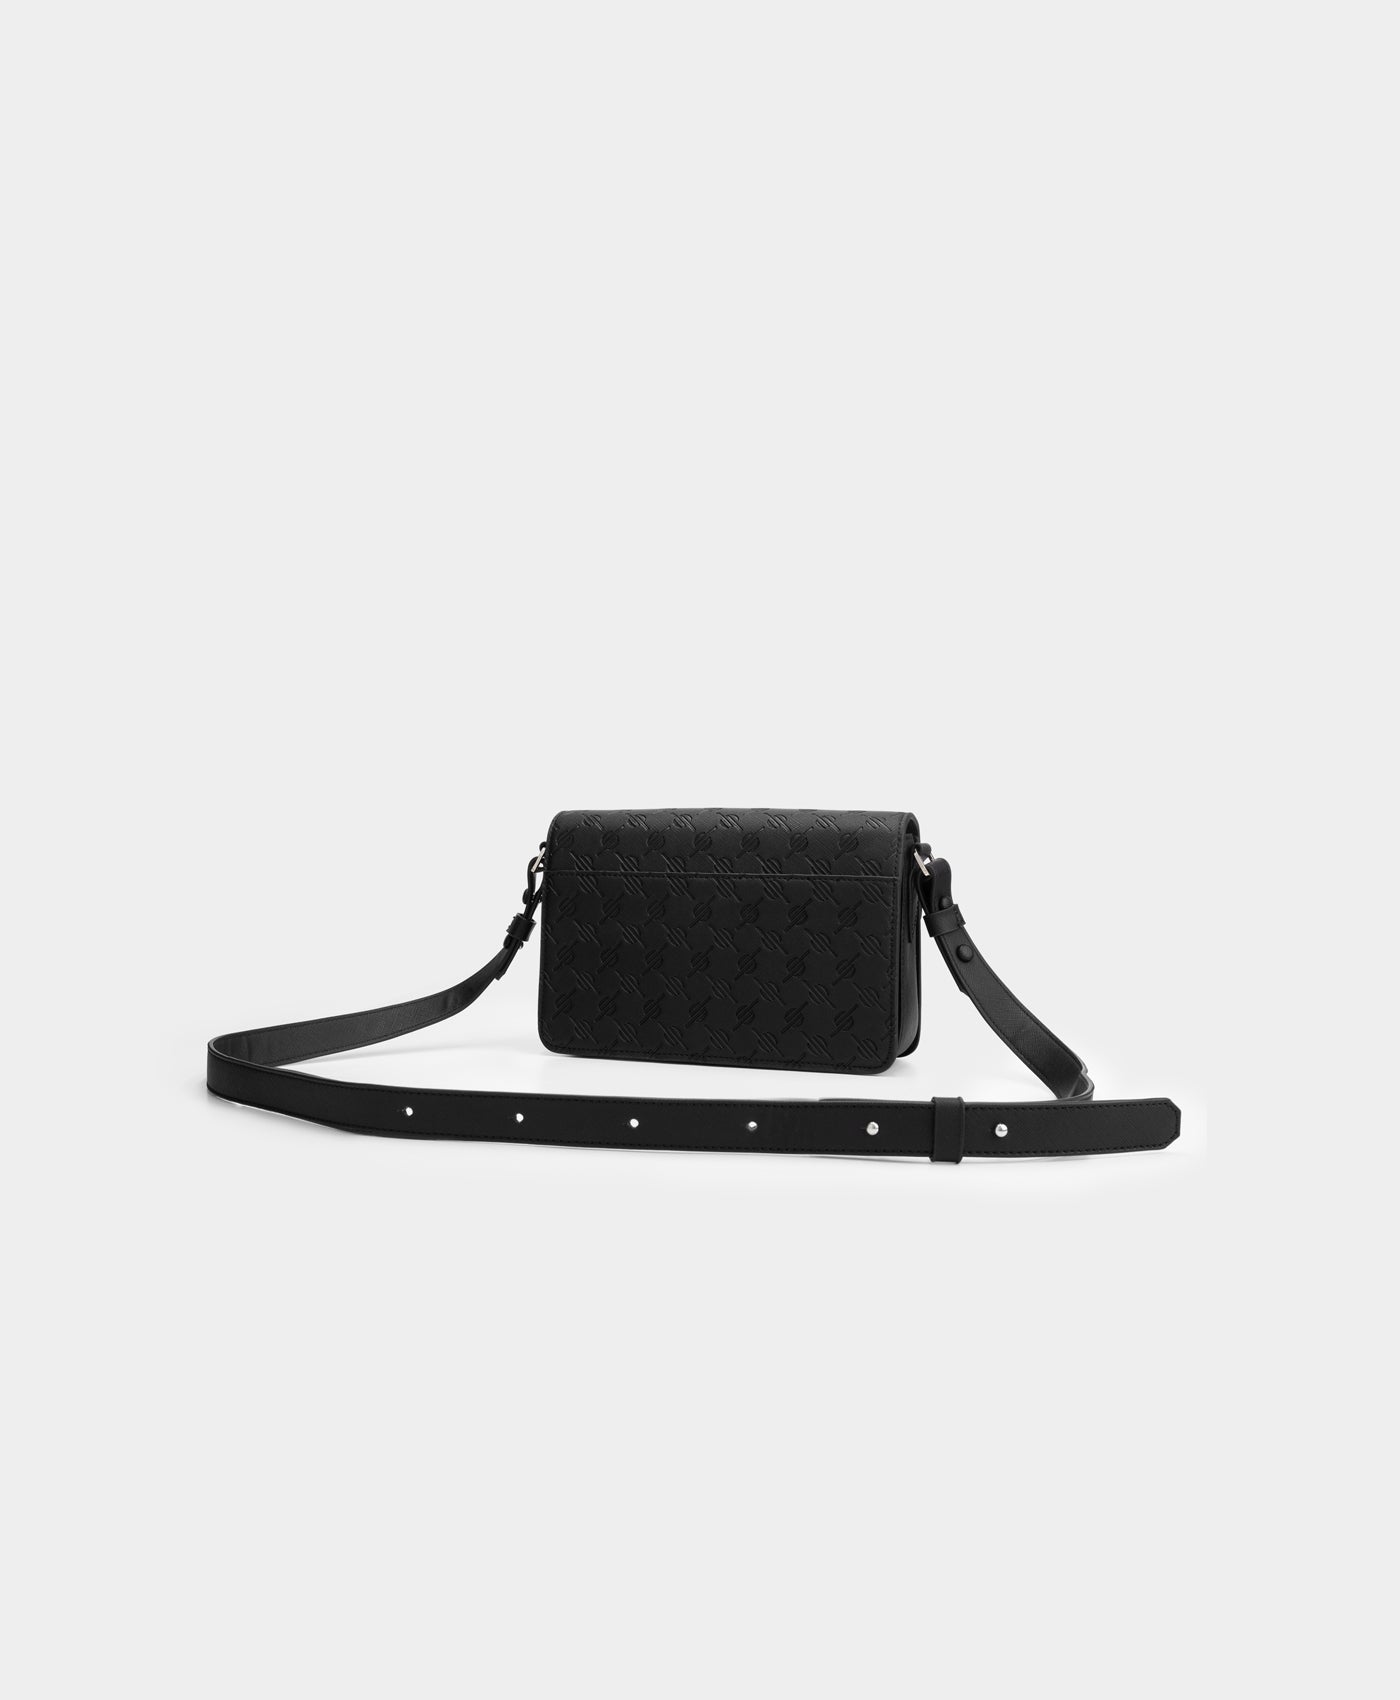 DP - Black Meru Monogram Bag - Packshot - Rear